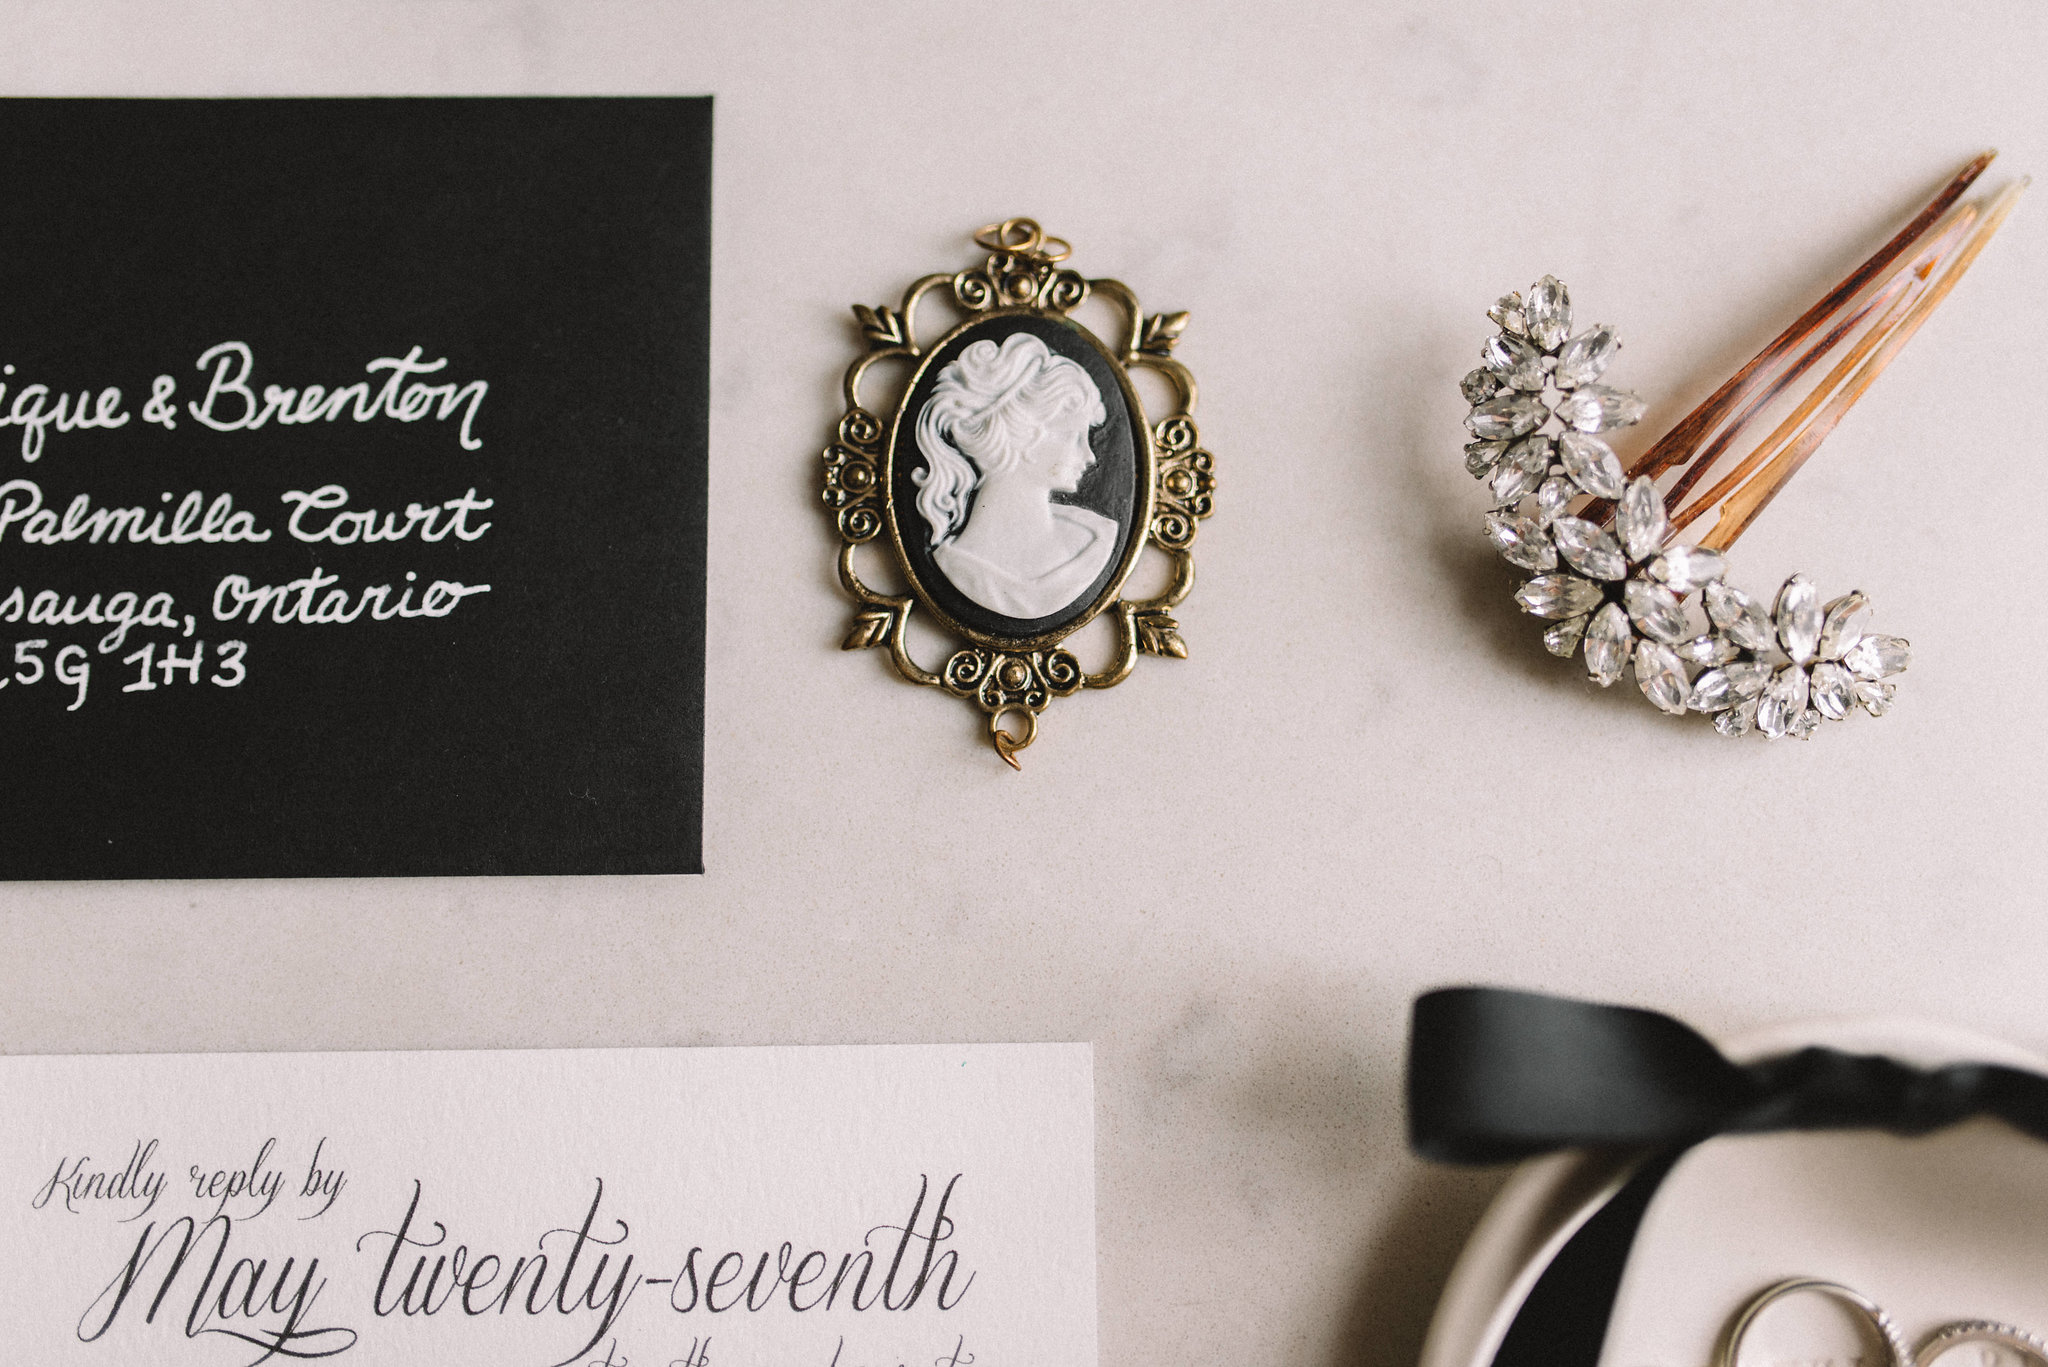 Moody Wedding Inspiration | Olive Photography Toronto